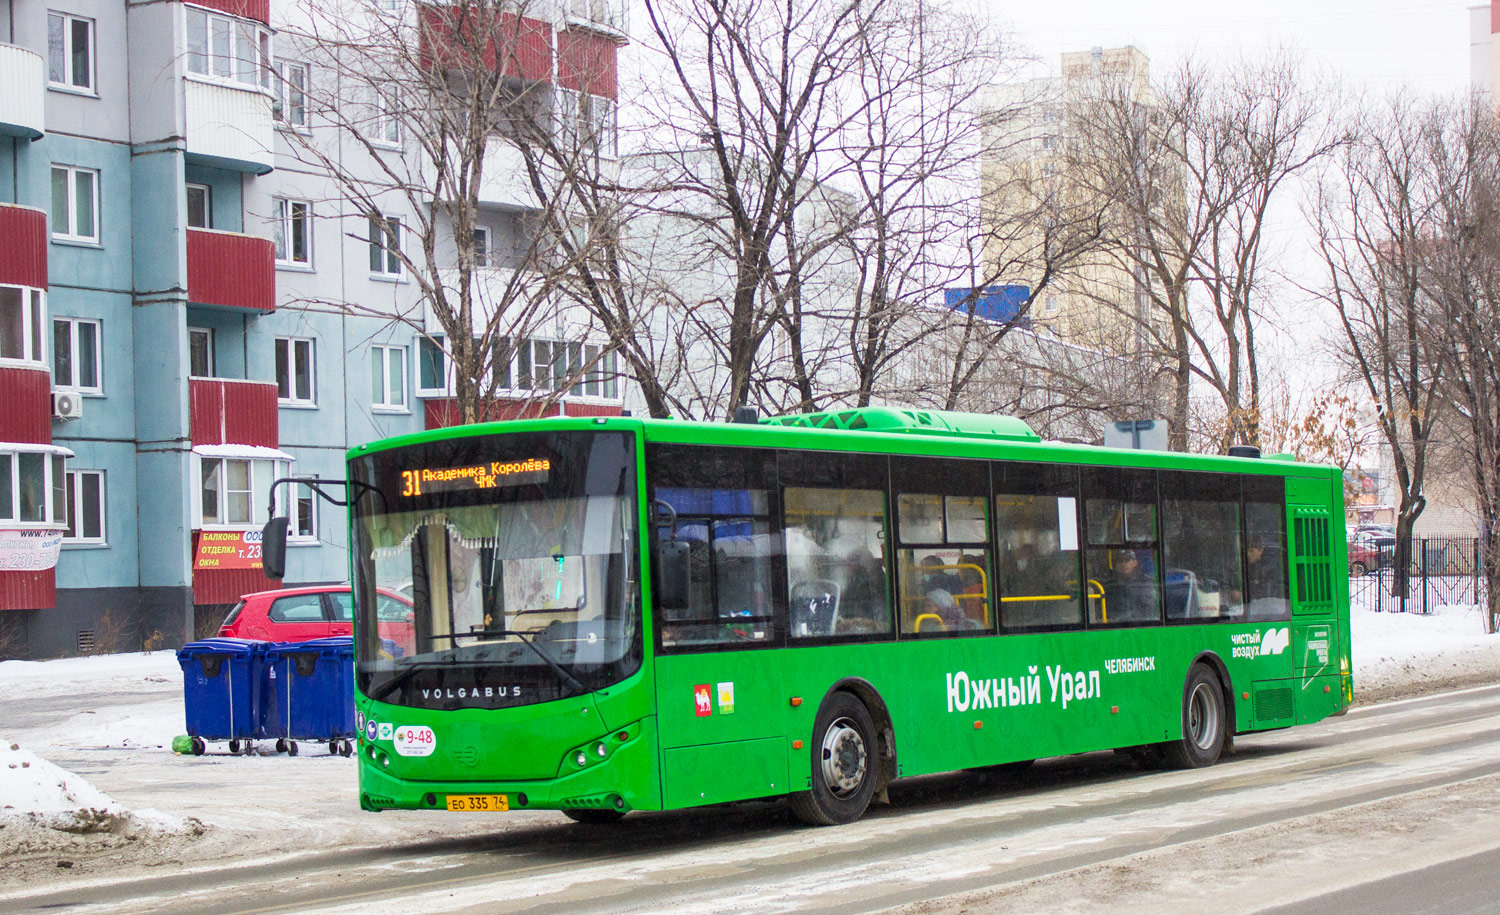 Chelyabinsk, Volgabus-5270.G2 (LNG) No. 9-48